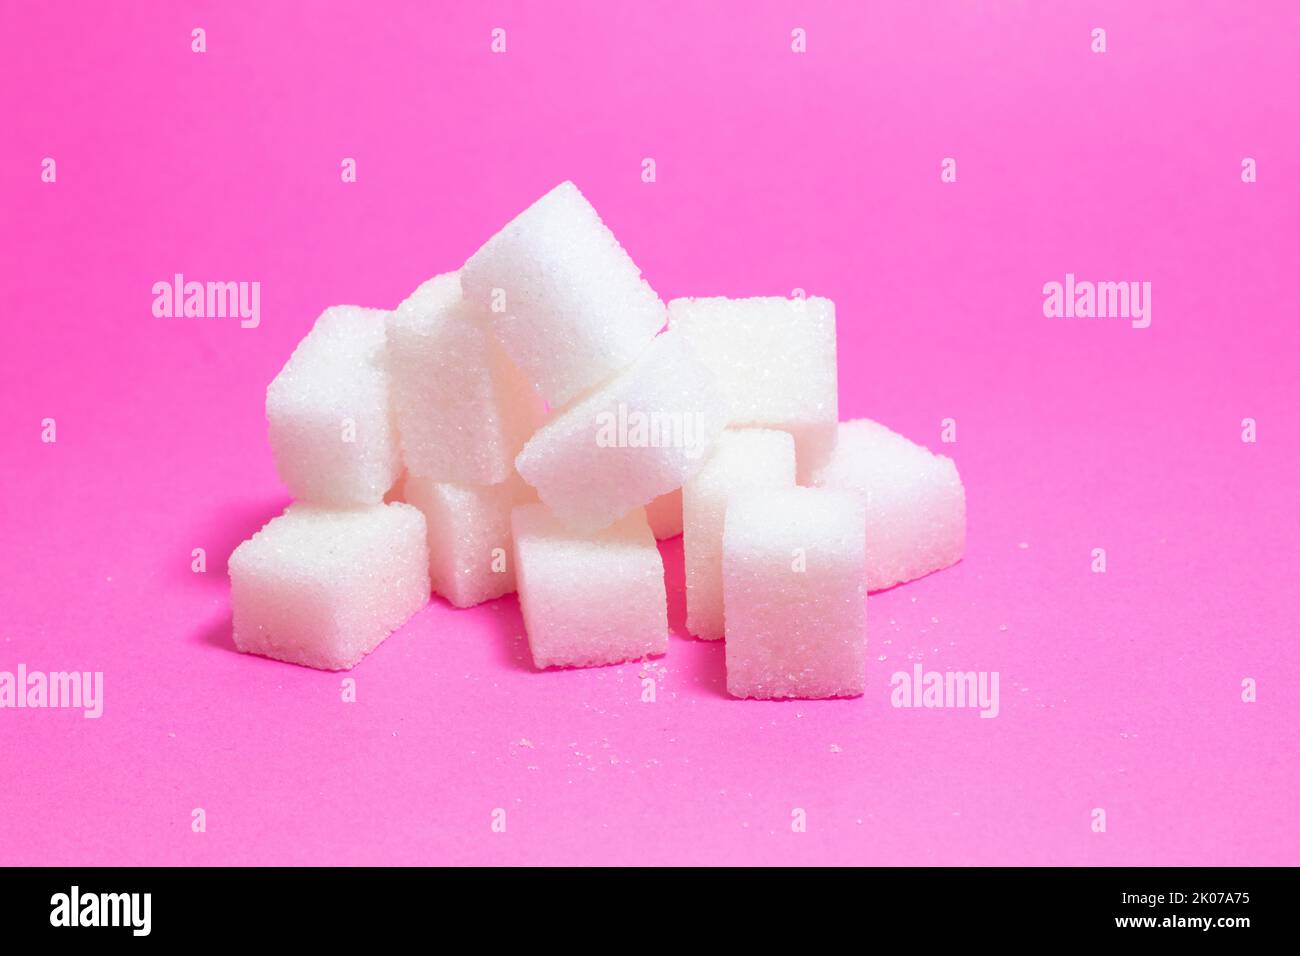 Cubos de azúcar. Pila de cubos de azúcar aislados sobre fondo rosa. Espacio de copia, espacio para texto. Nadie, nadie. Concepto de idea de comida dañina. Foto de stock